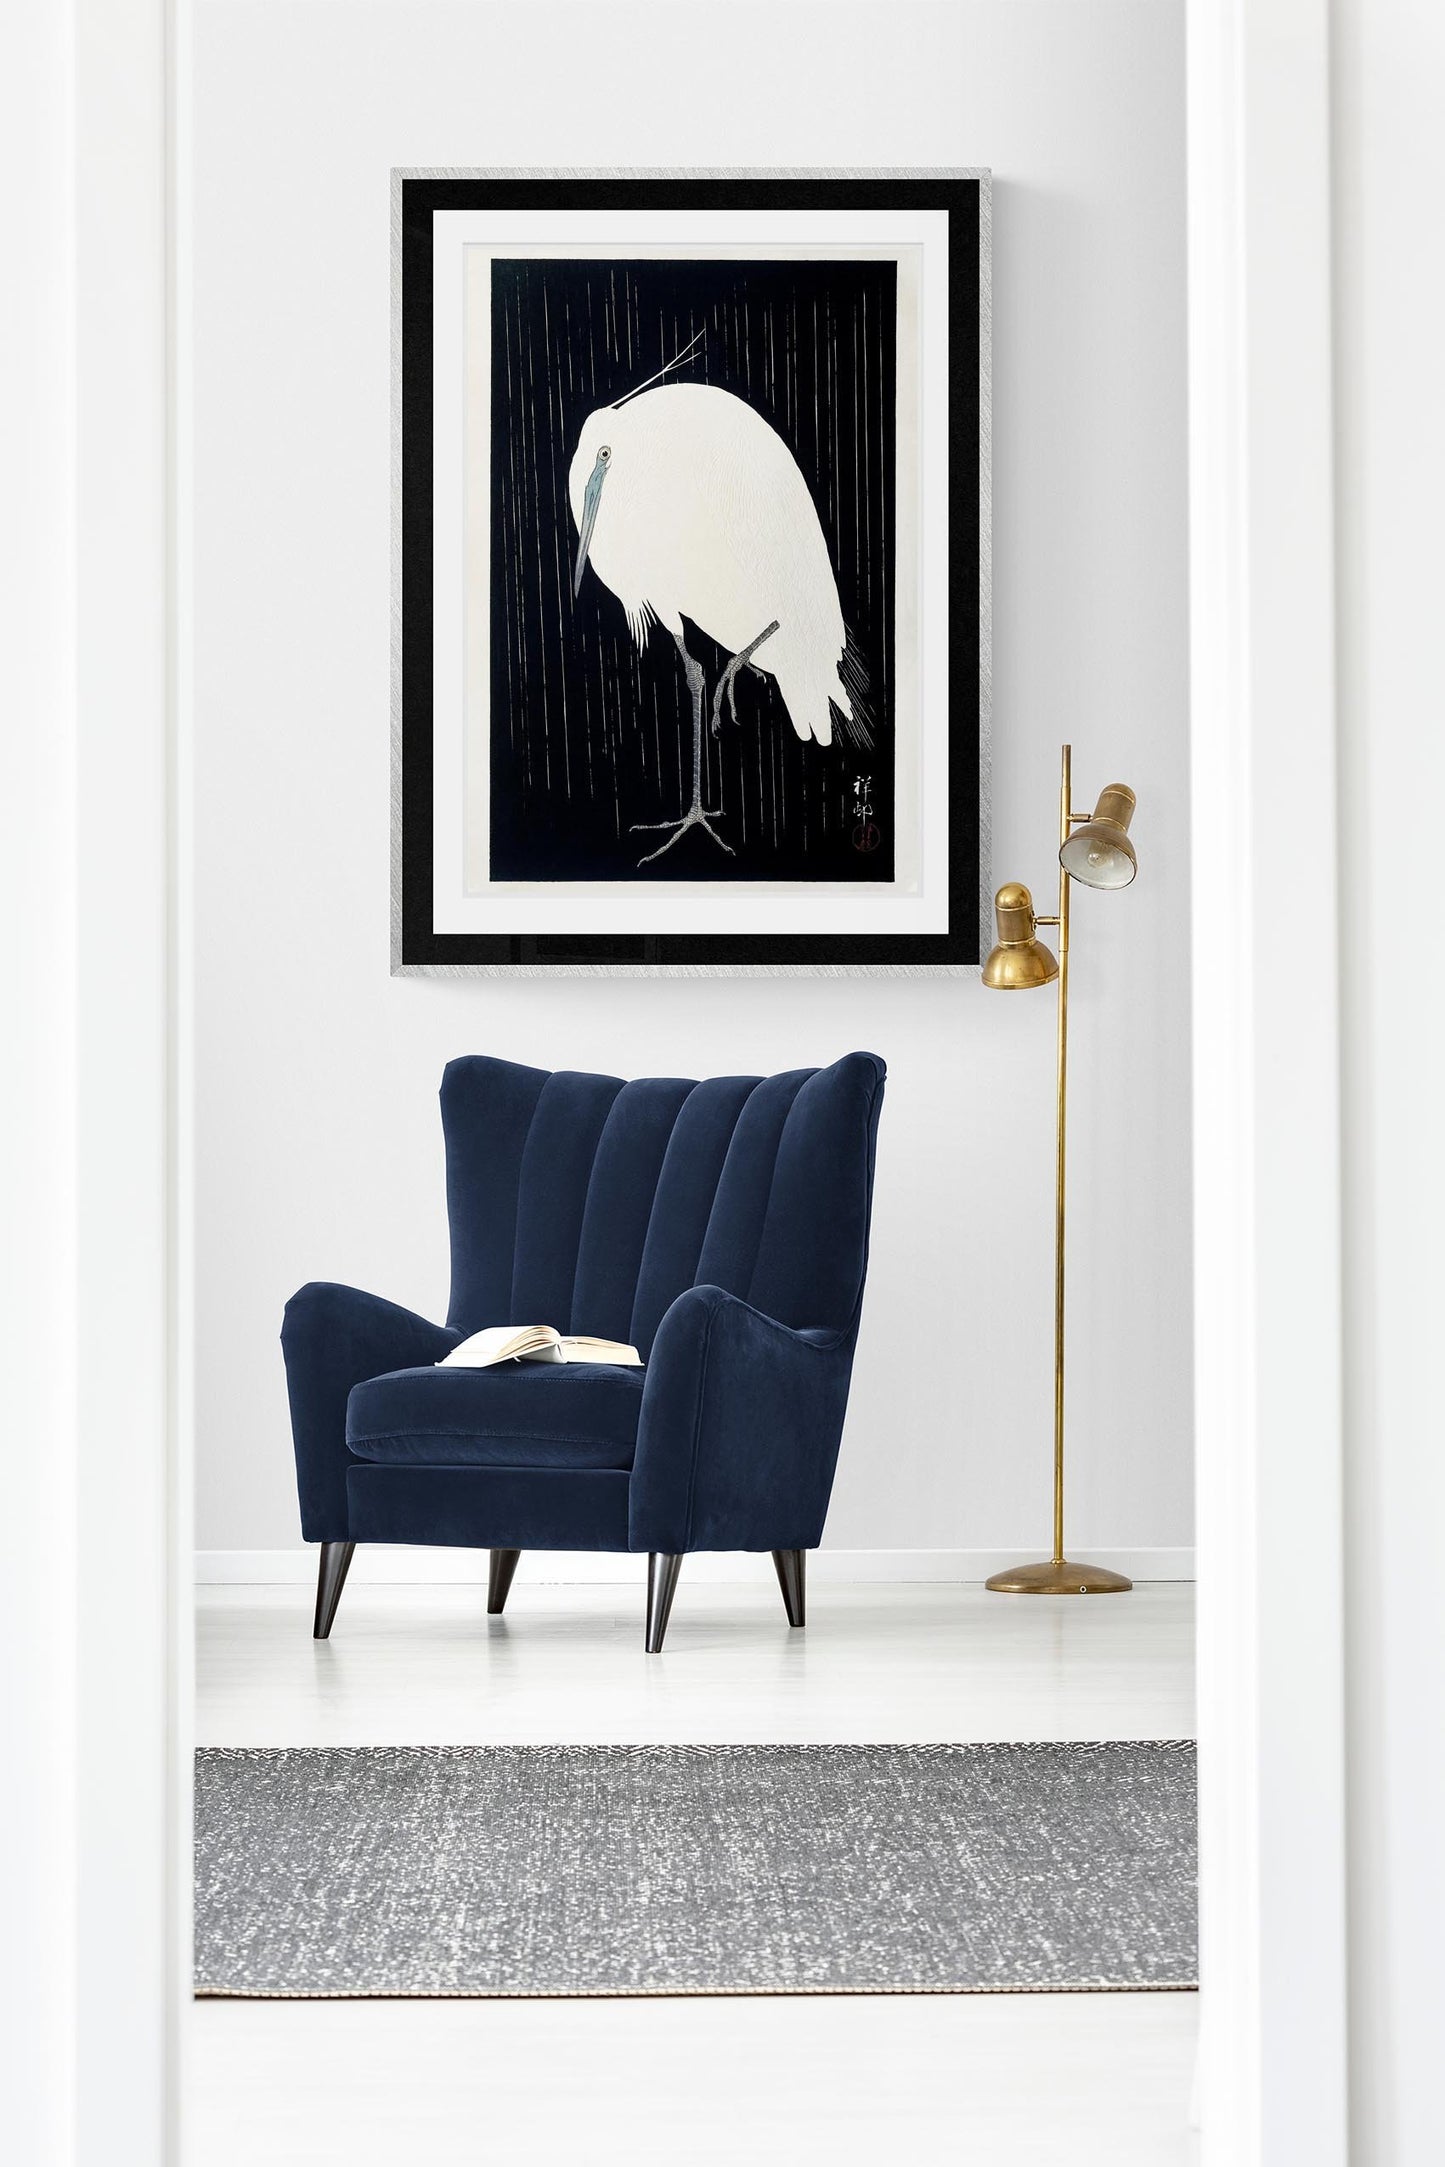 Egret in the rain / White Heron in Dark Snow by Ohara Koson